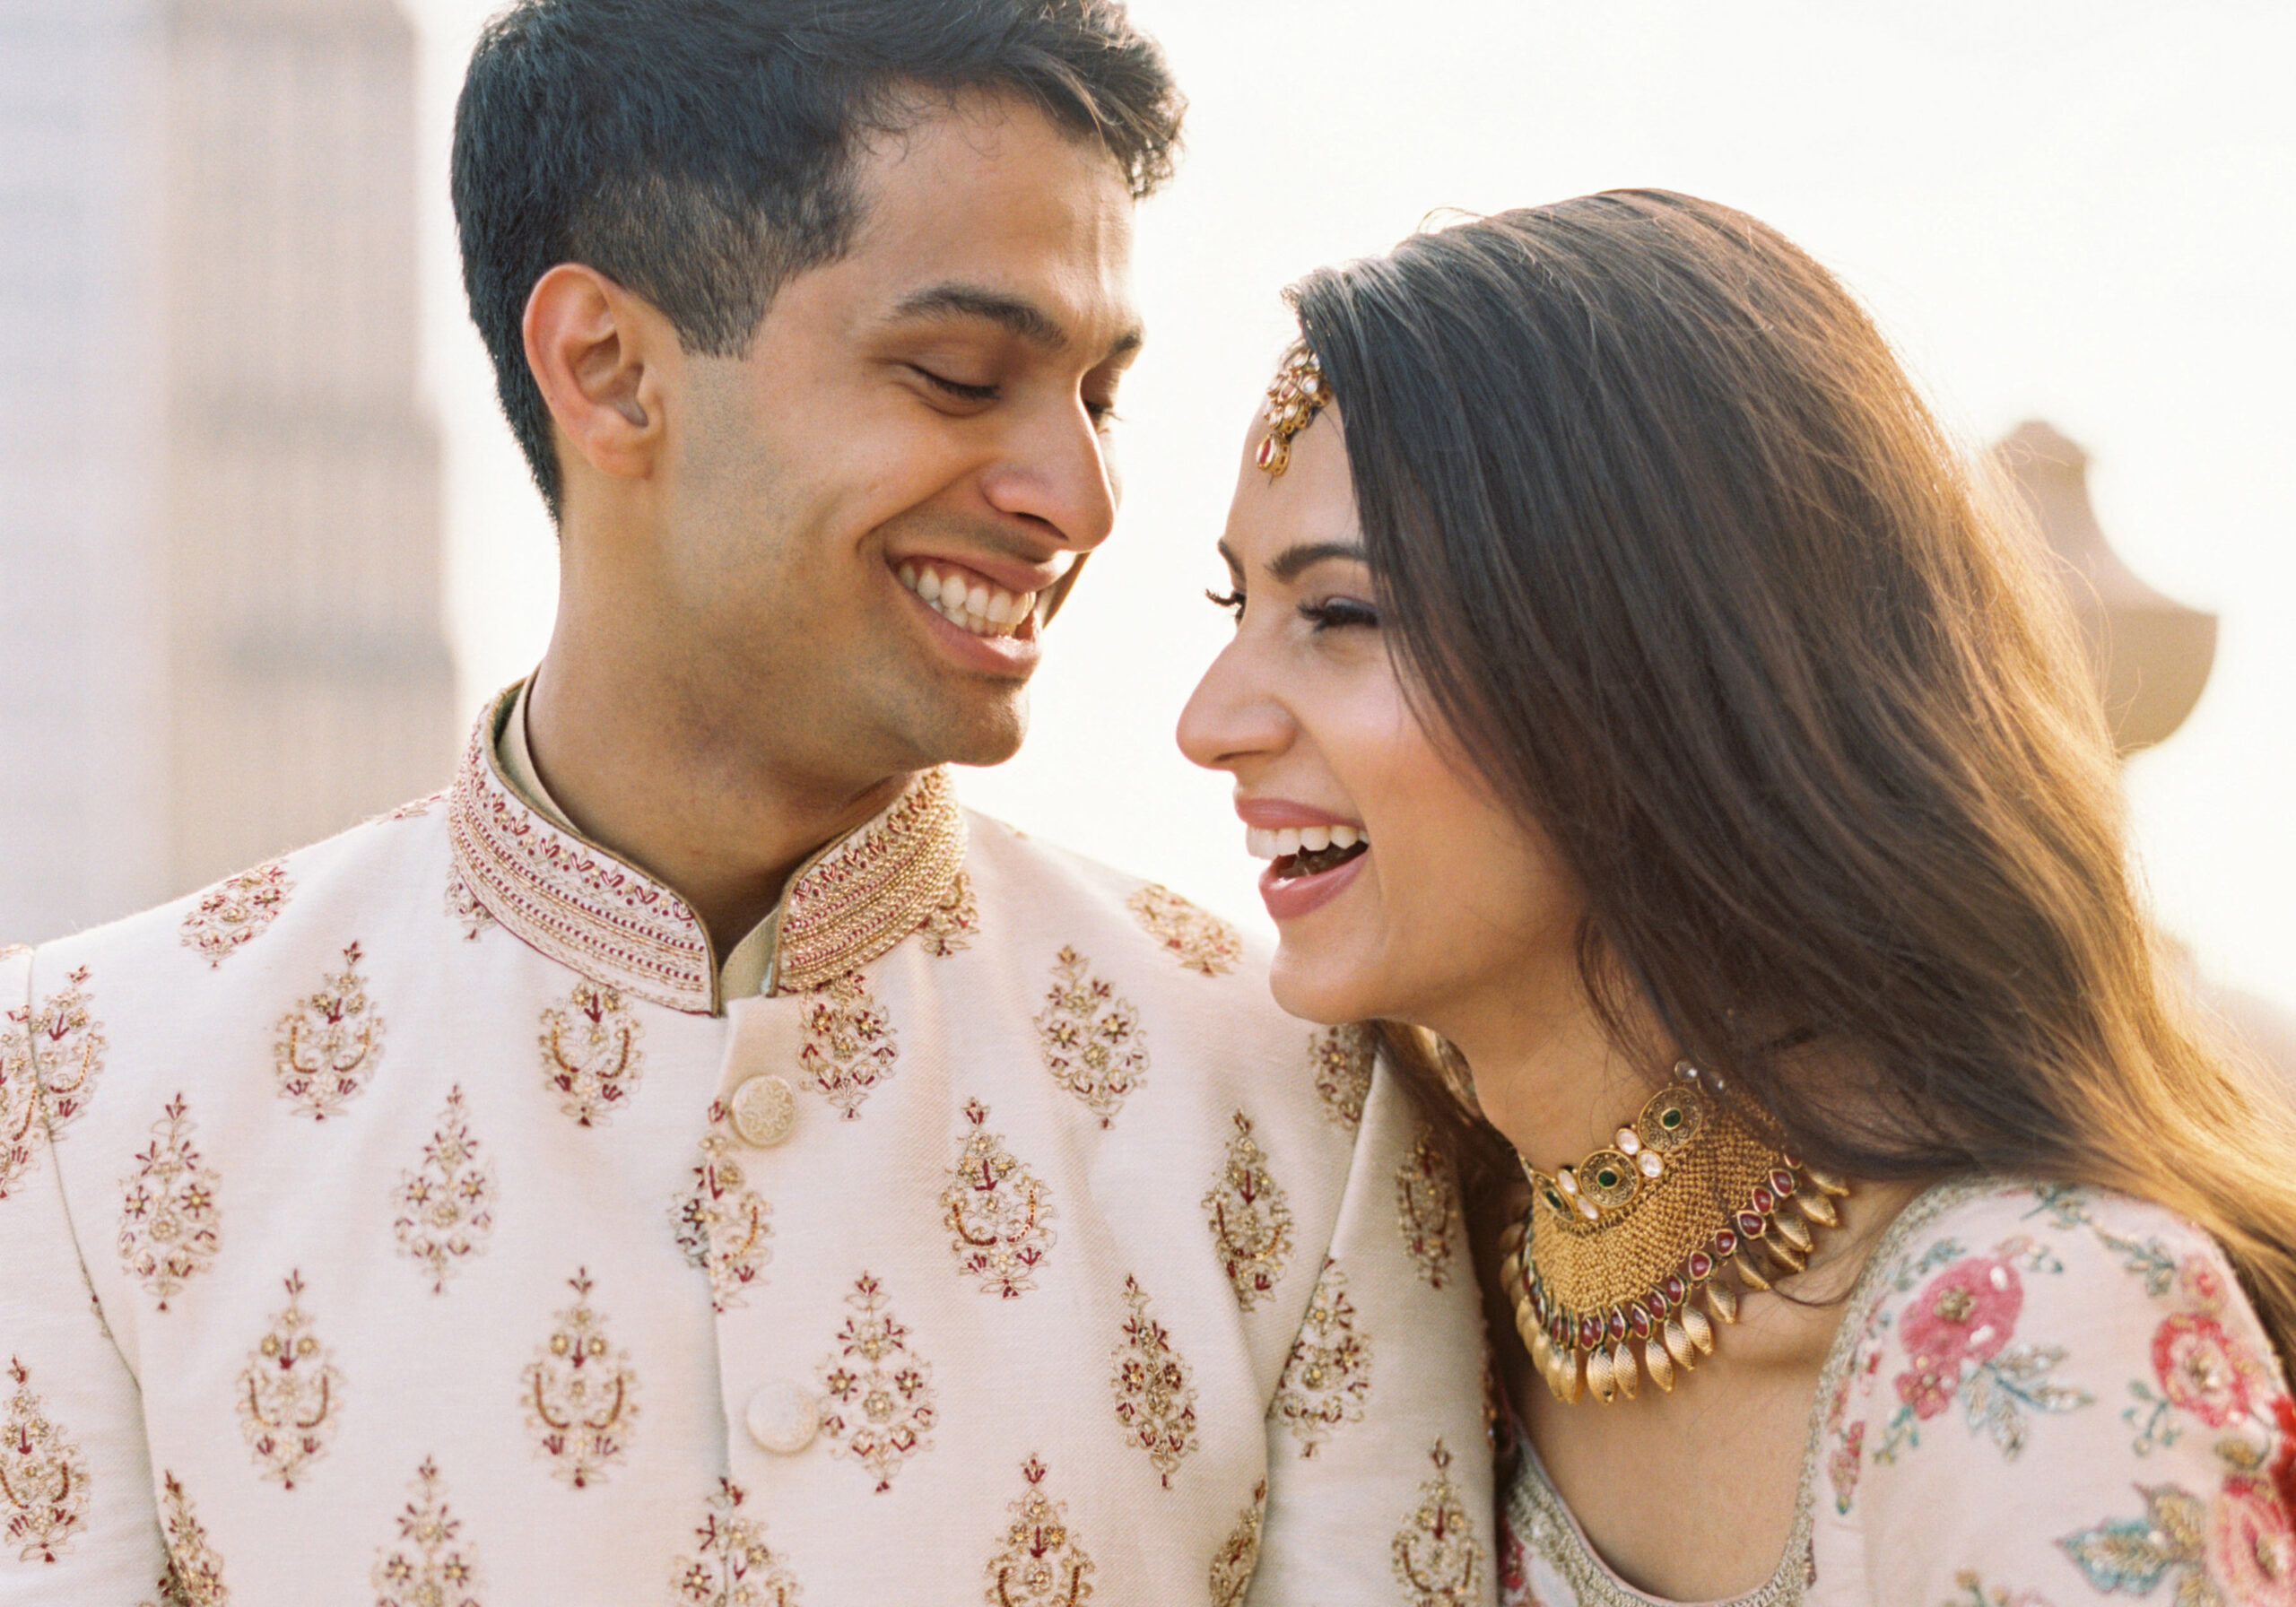 Indian wedding videographer in Nashville captures bride and groom